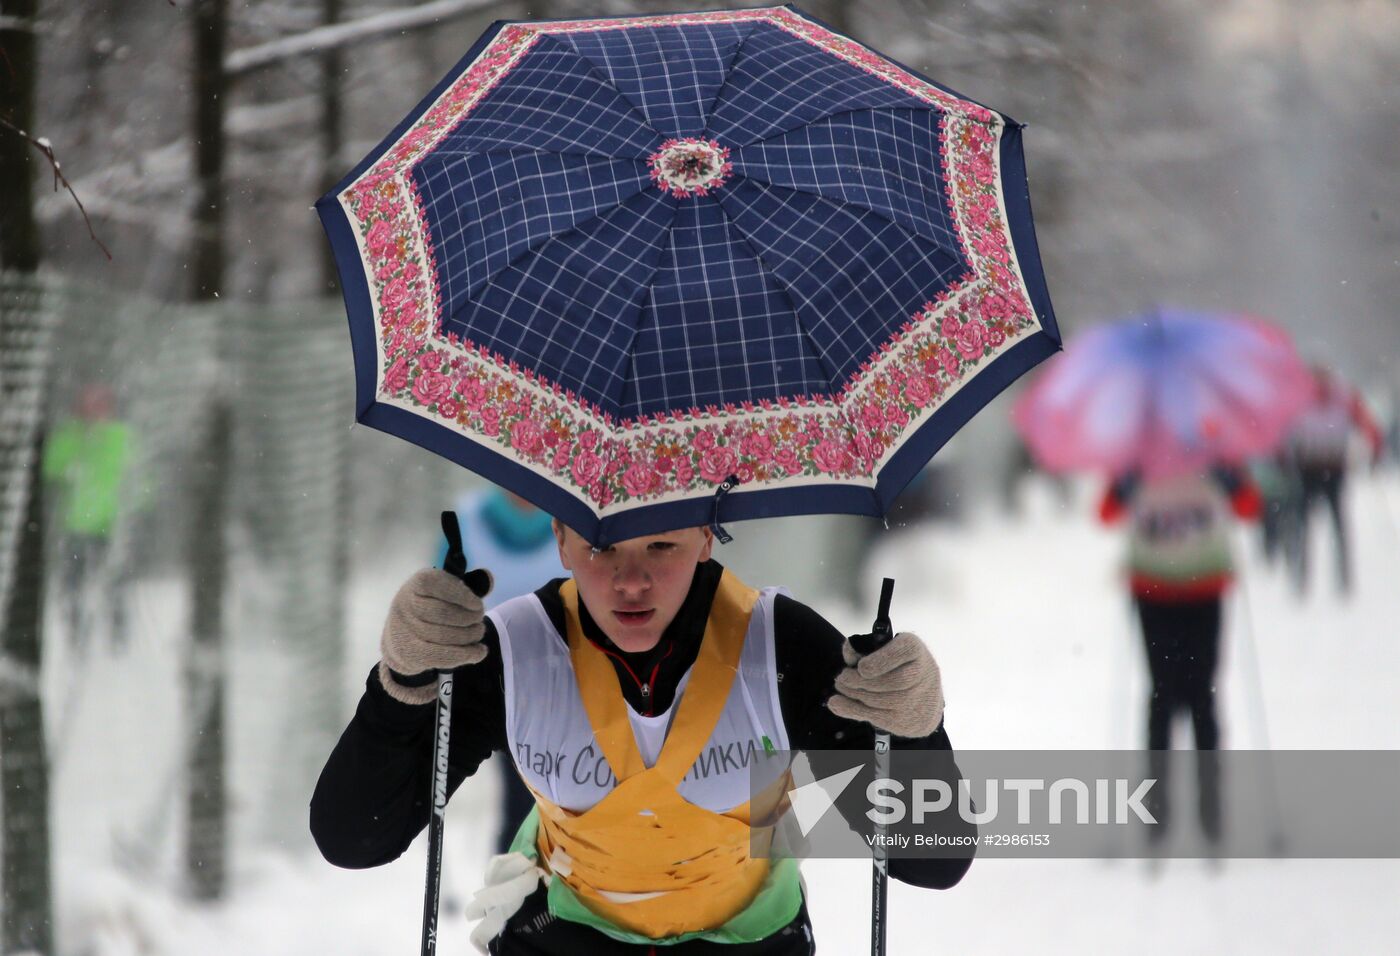 Fun Race cross-country skiing event at Sokolniki